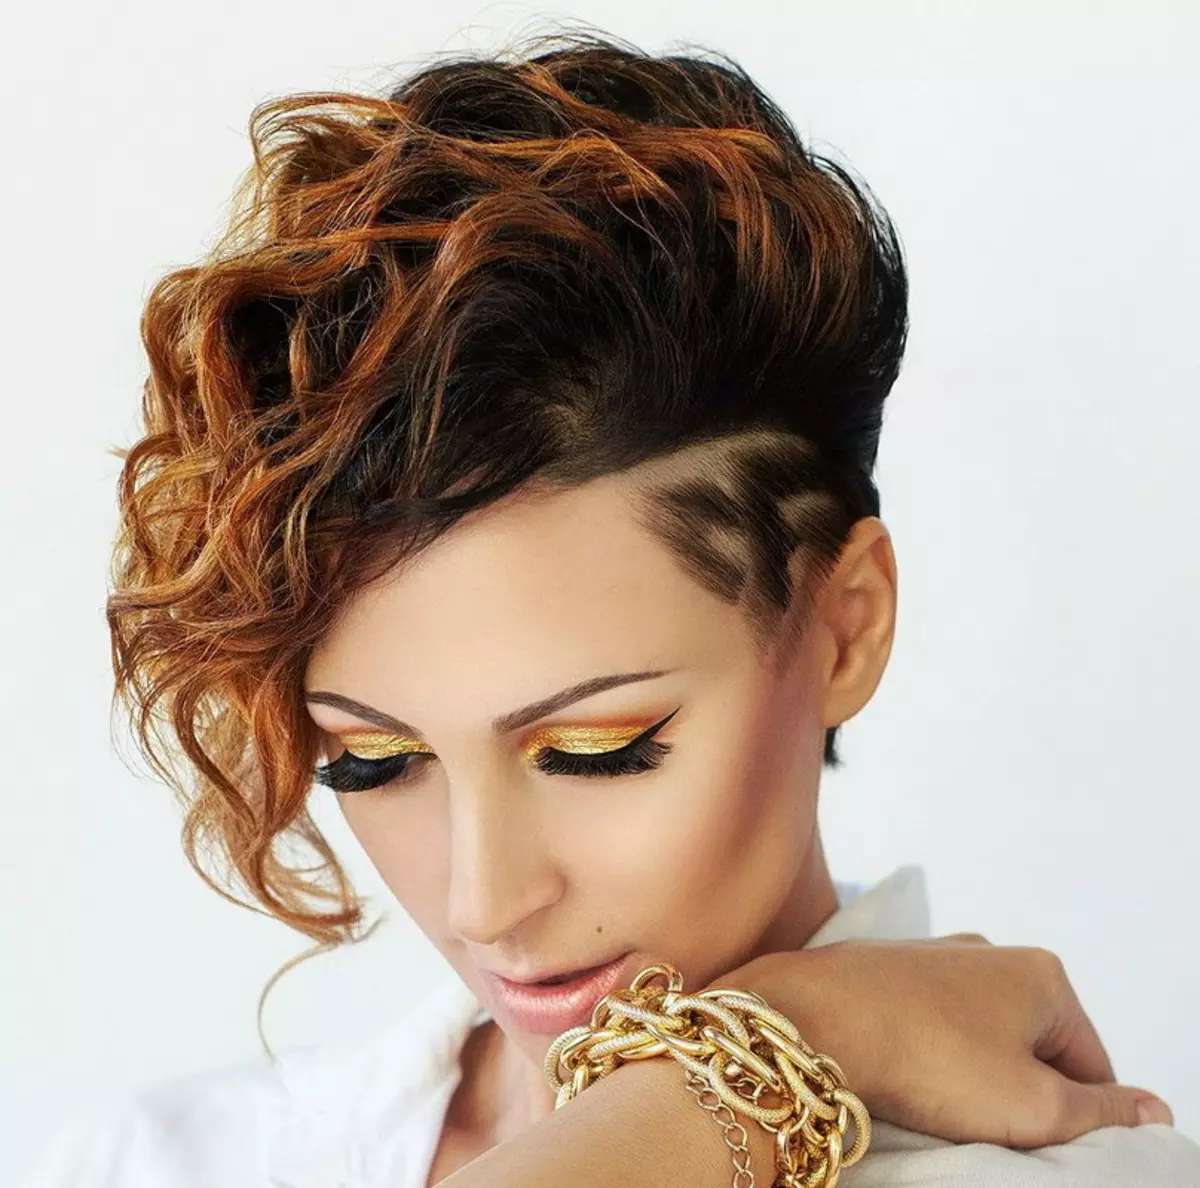 Potongan rambut wanita kreatif: gaya rambut yang sangat modis dan kreatif dengan candi yang dicukur, potongan rambut rambut pendek 5868_39